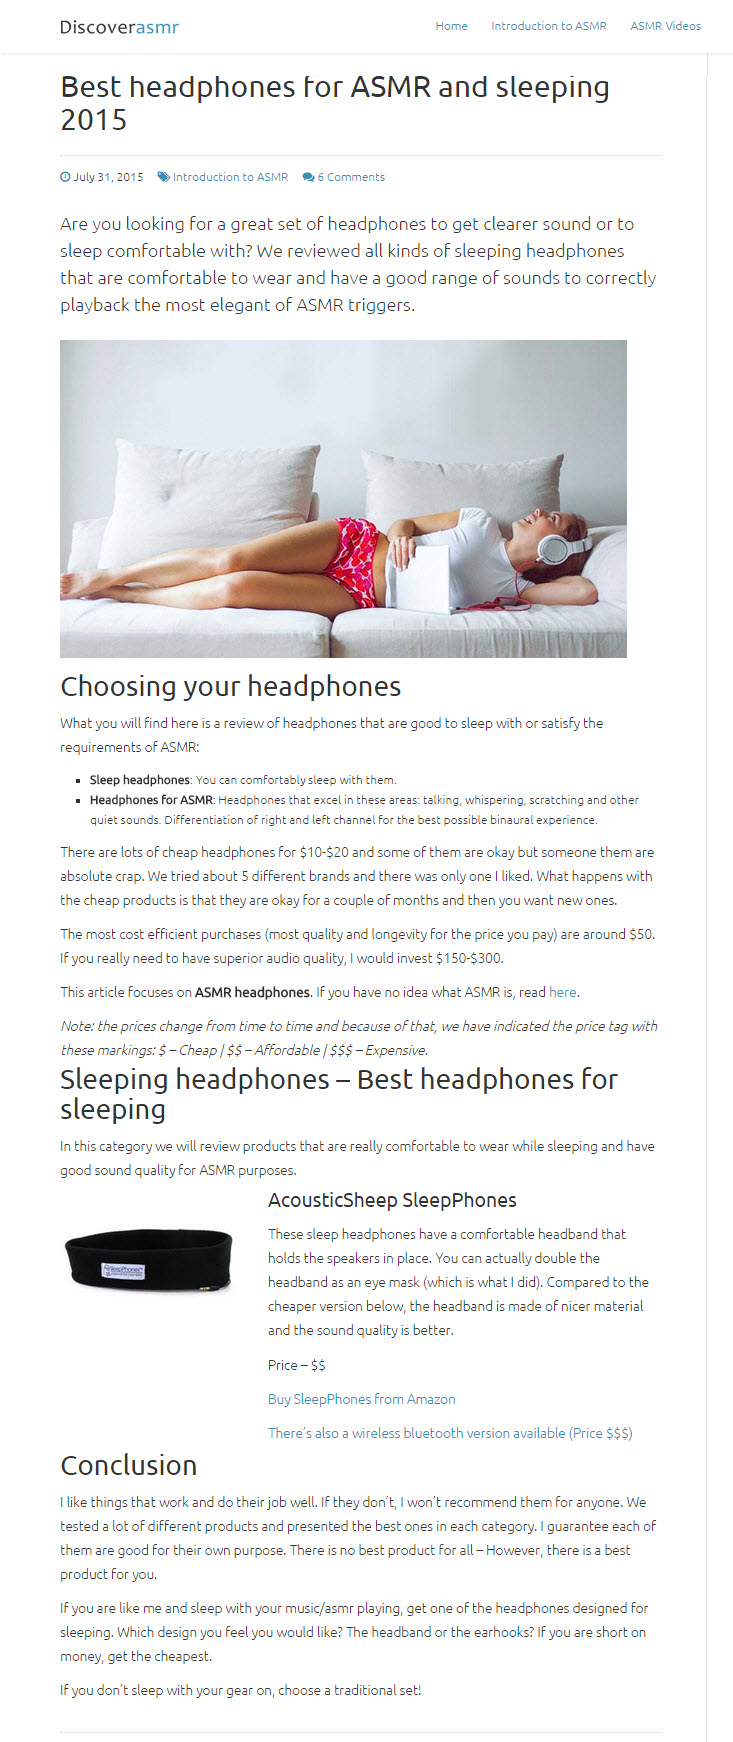 Best Headphones for ASMR and Sleeping